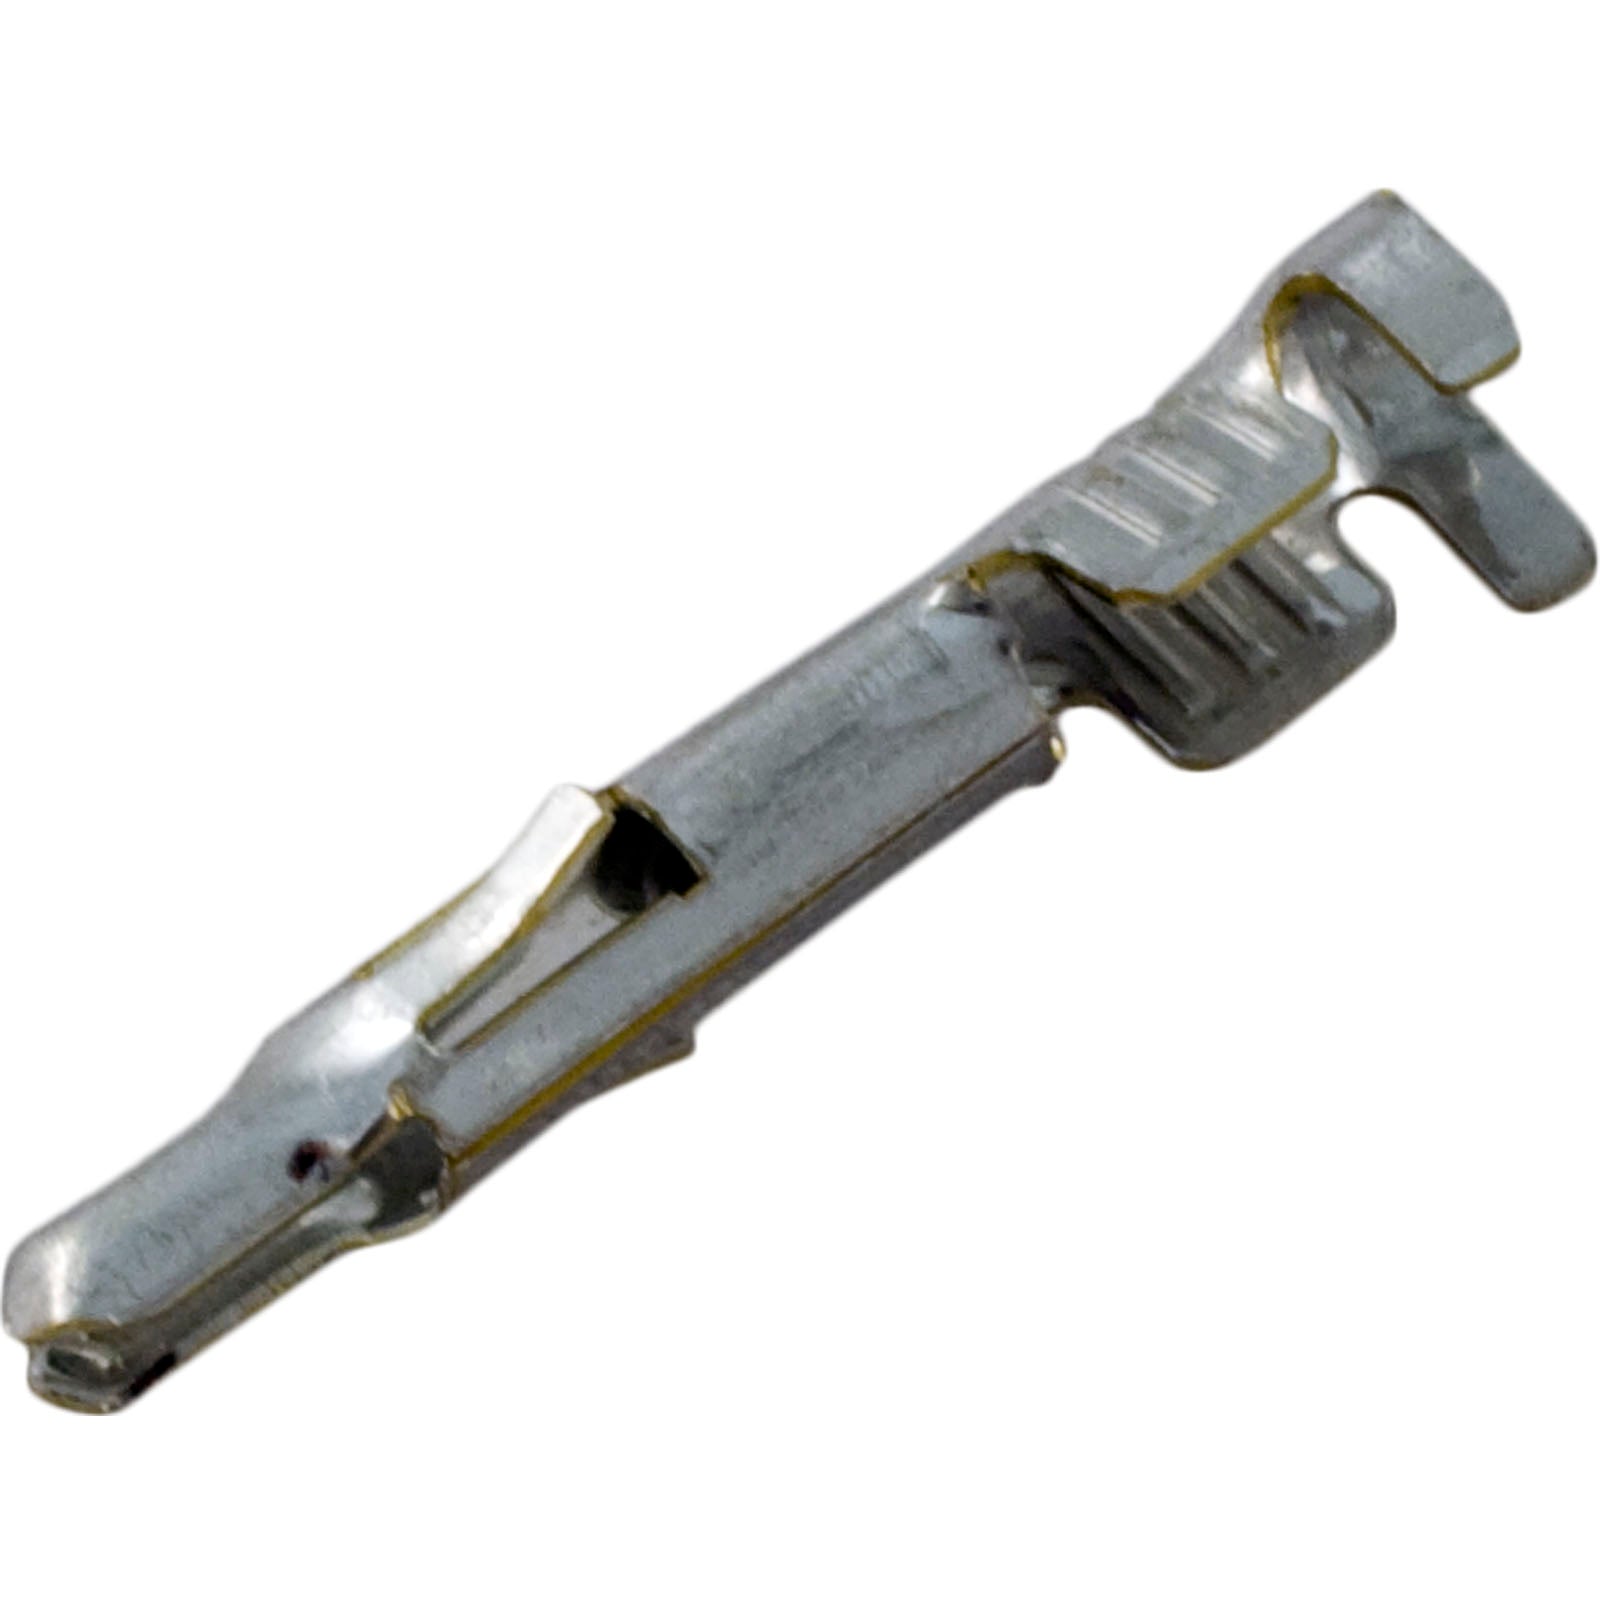 Male Amp Pin 14-20 AWG (BAG OF 25 EA)